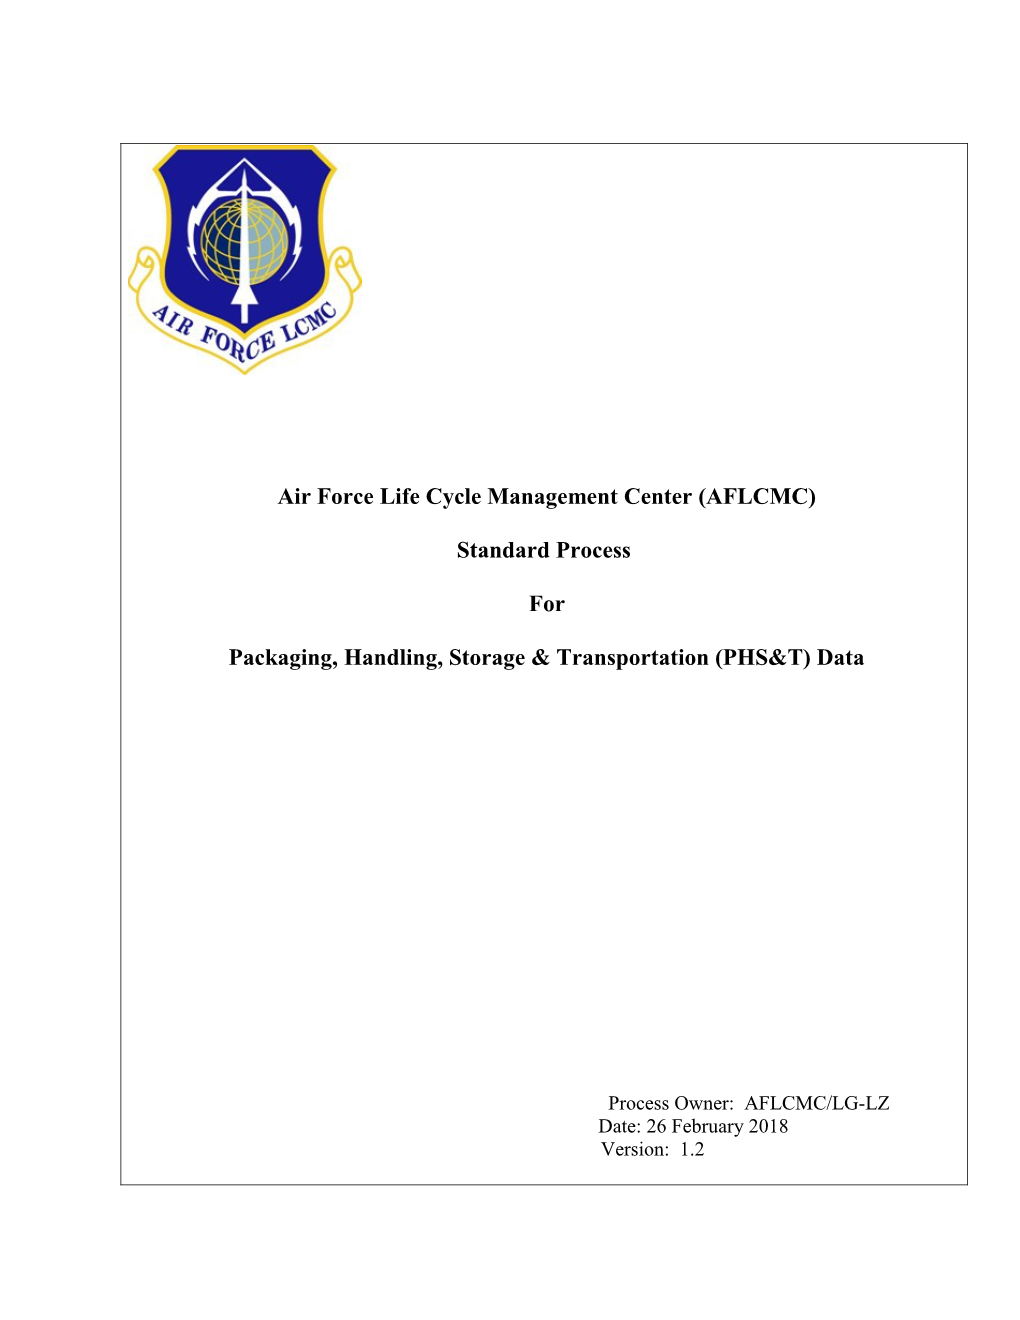 Packaging Handling Storage and Transportation (PHS&T)